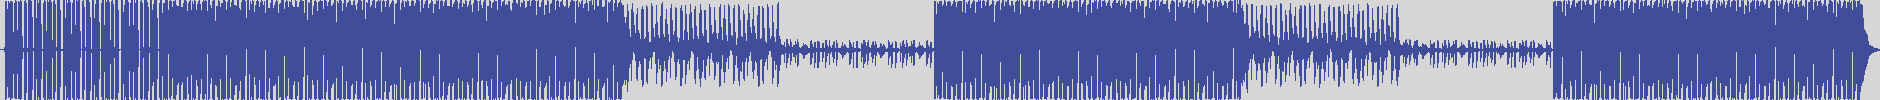 nf_boyz_records [NFY073] Da Turel - Garino [Original Mix] audio wave form